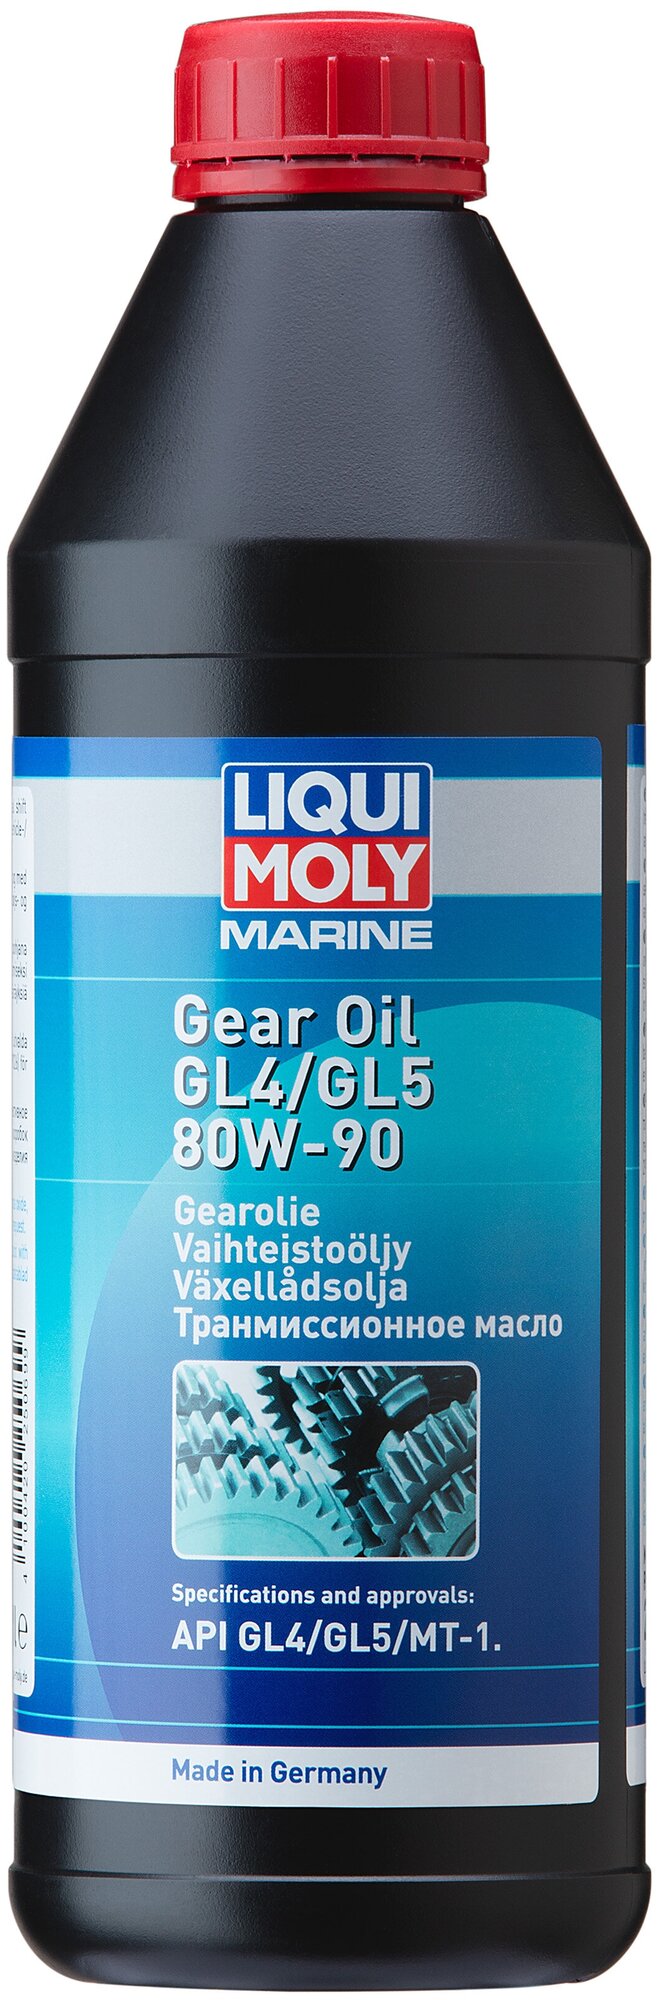 Масло транс. д/водн.техн. marine gear oil 80w-90 gl-4/gl-5/mt-1 (1л), liqui moly, 25069